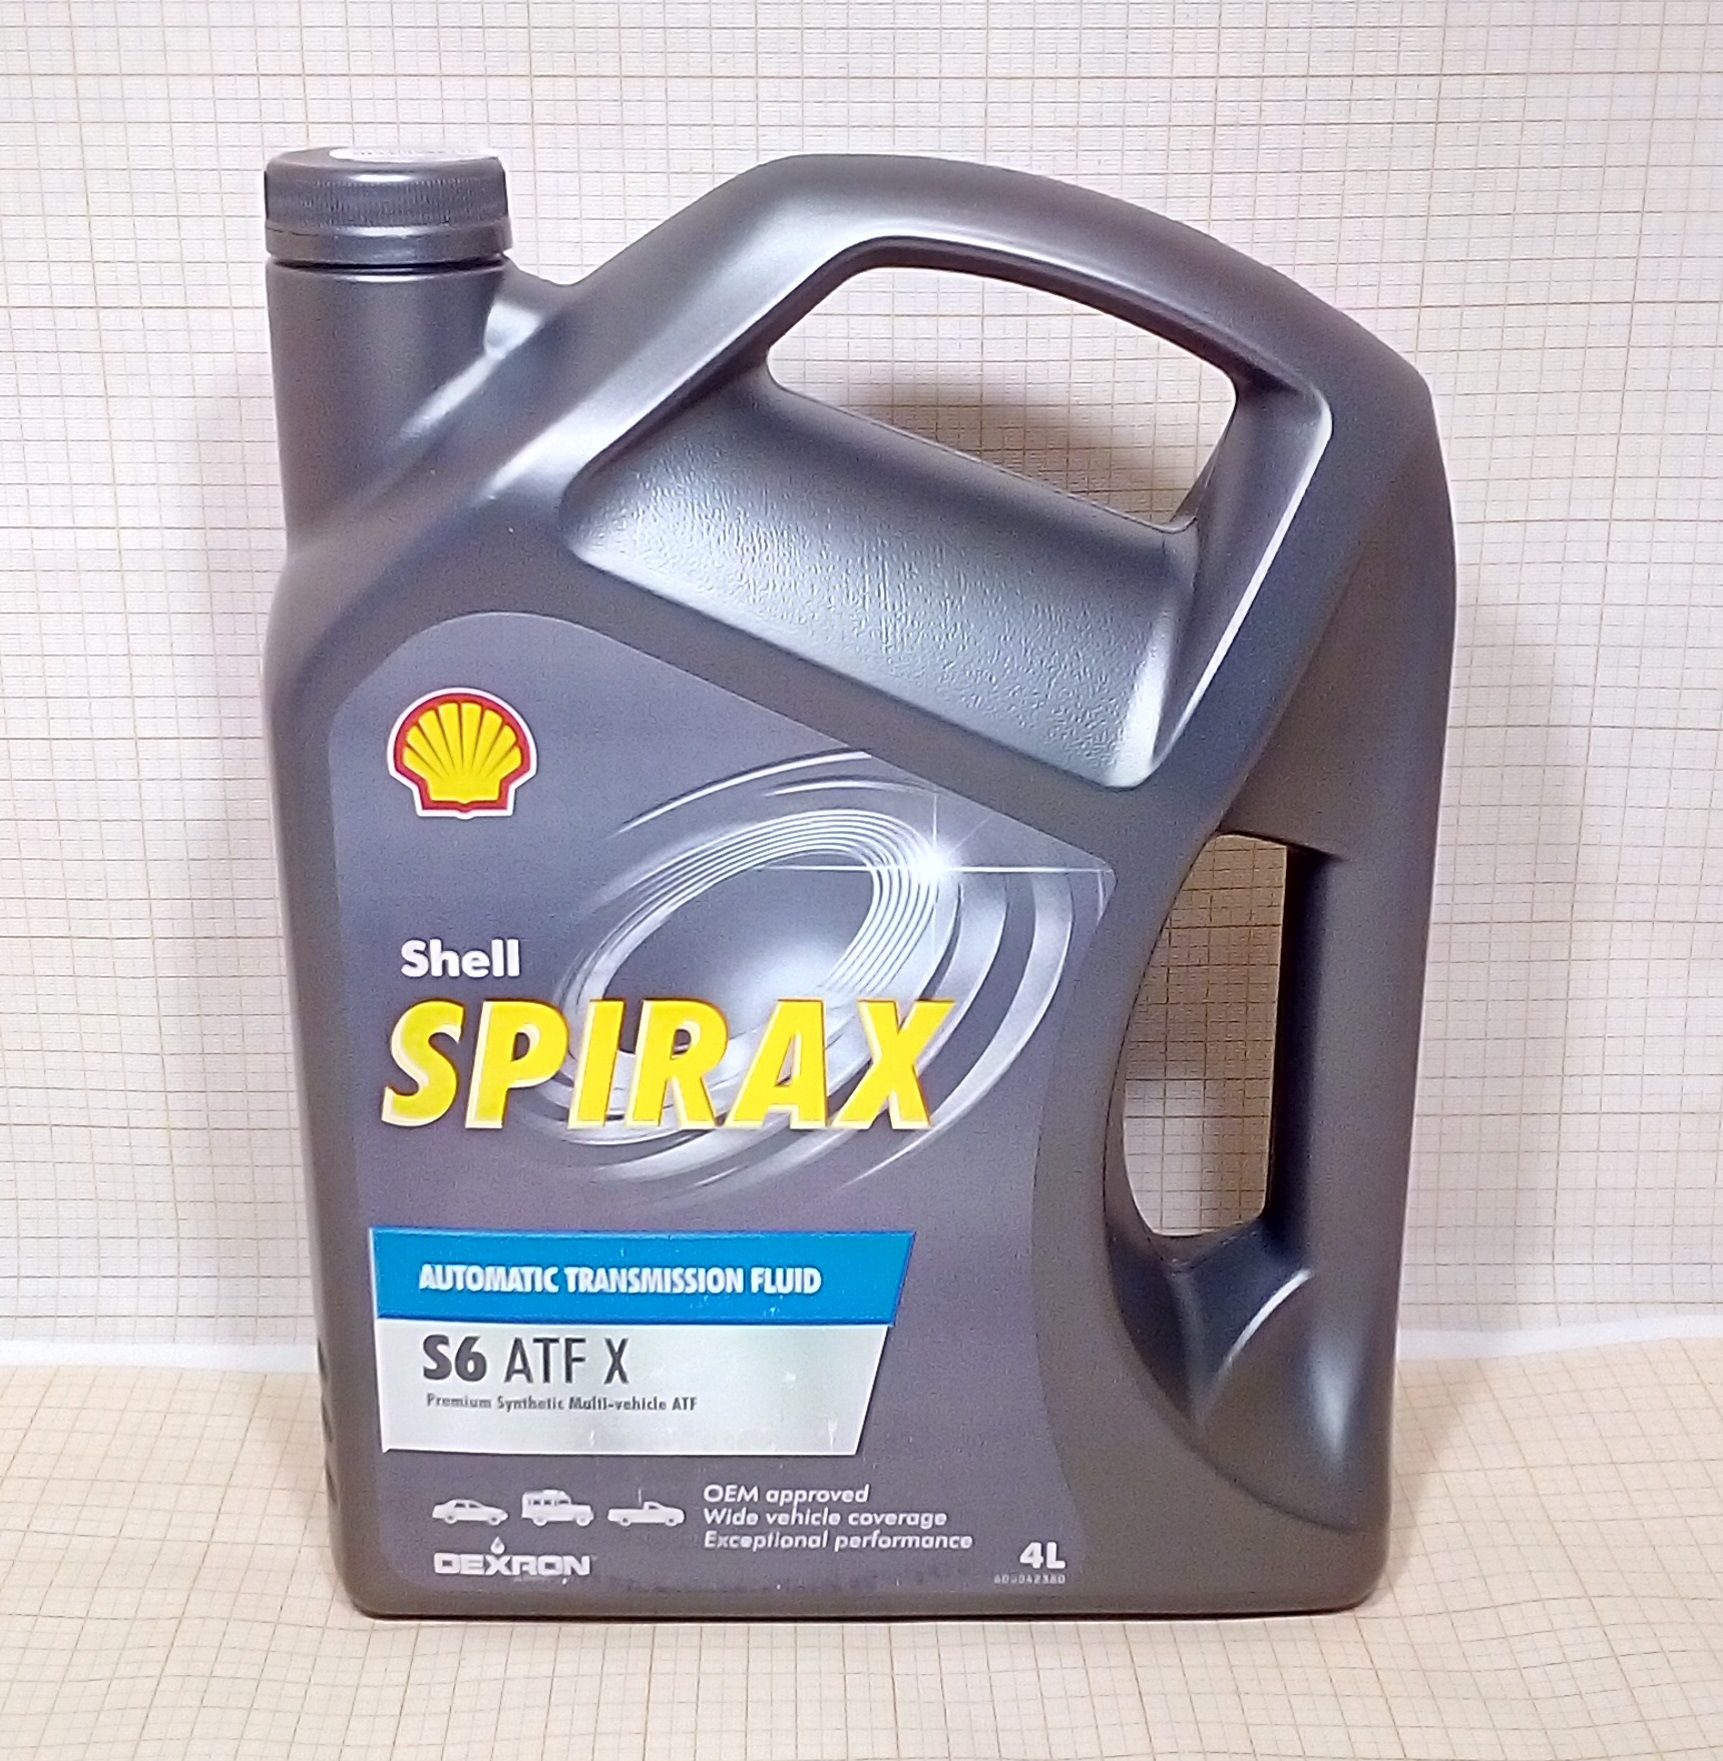 Spirax s6 atf x